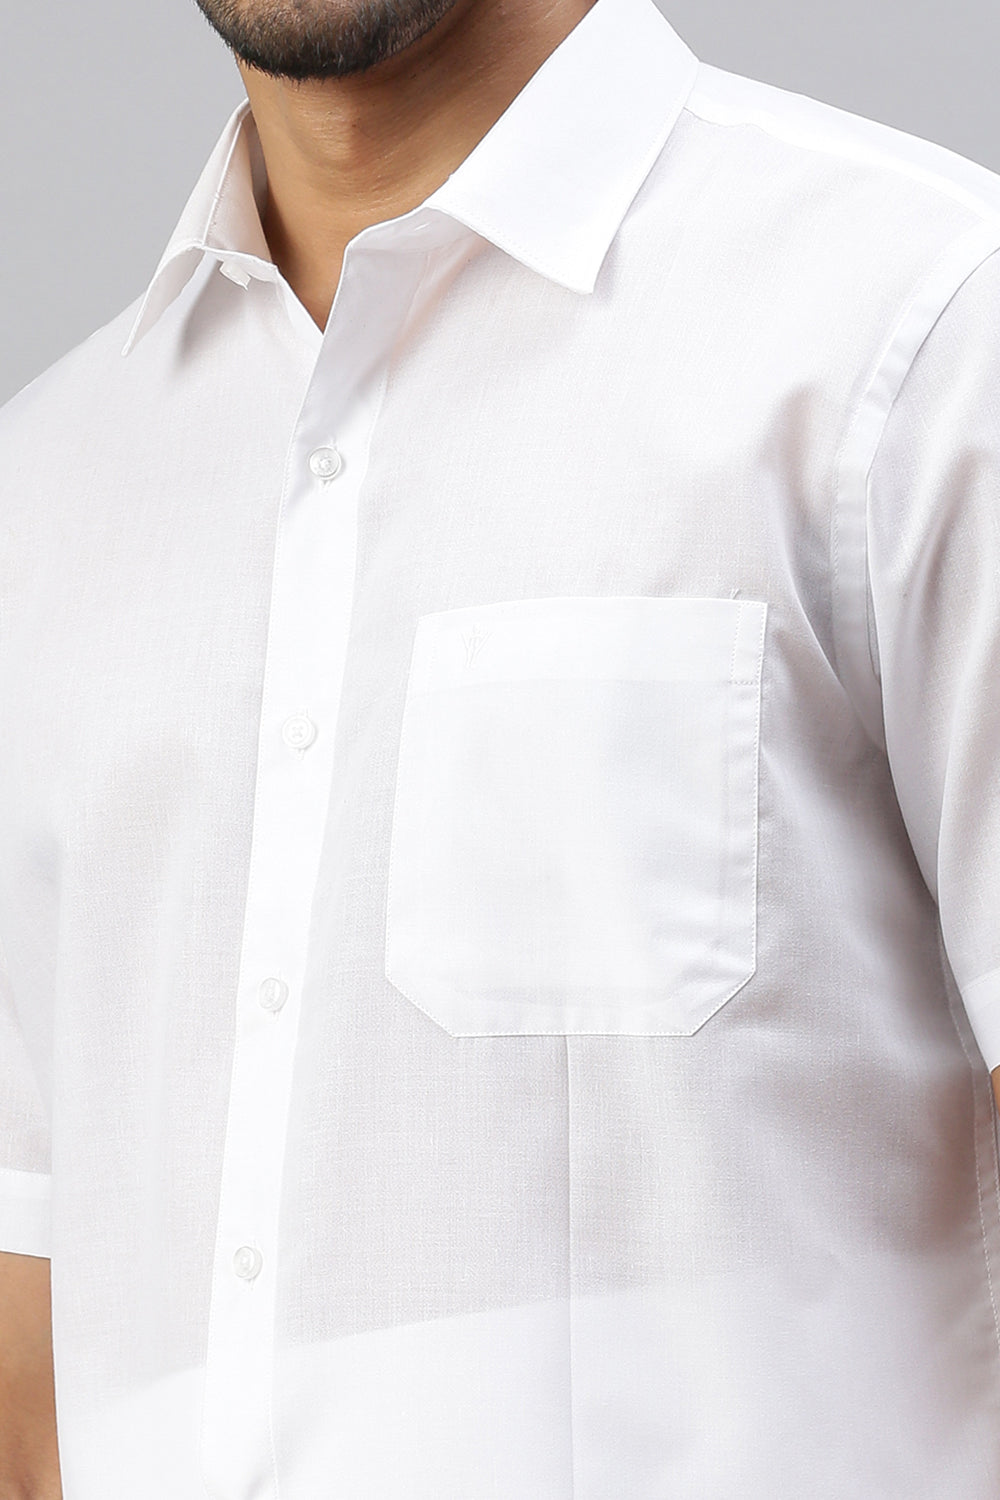 Mens Cotton White Shirt Half Sleeves 100% Cotton